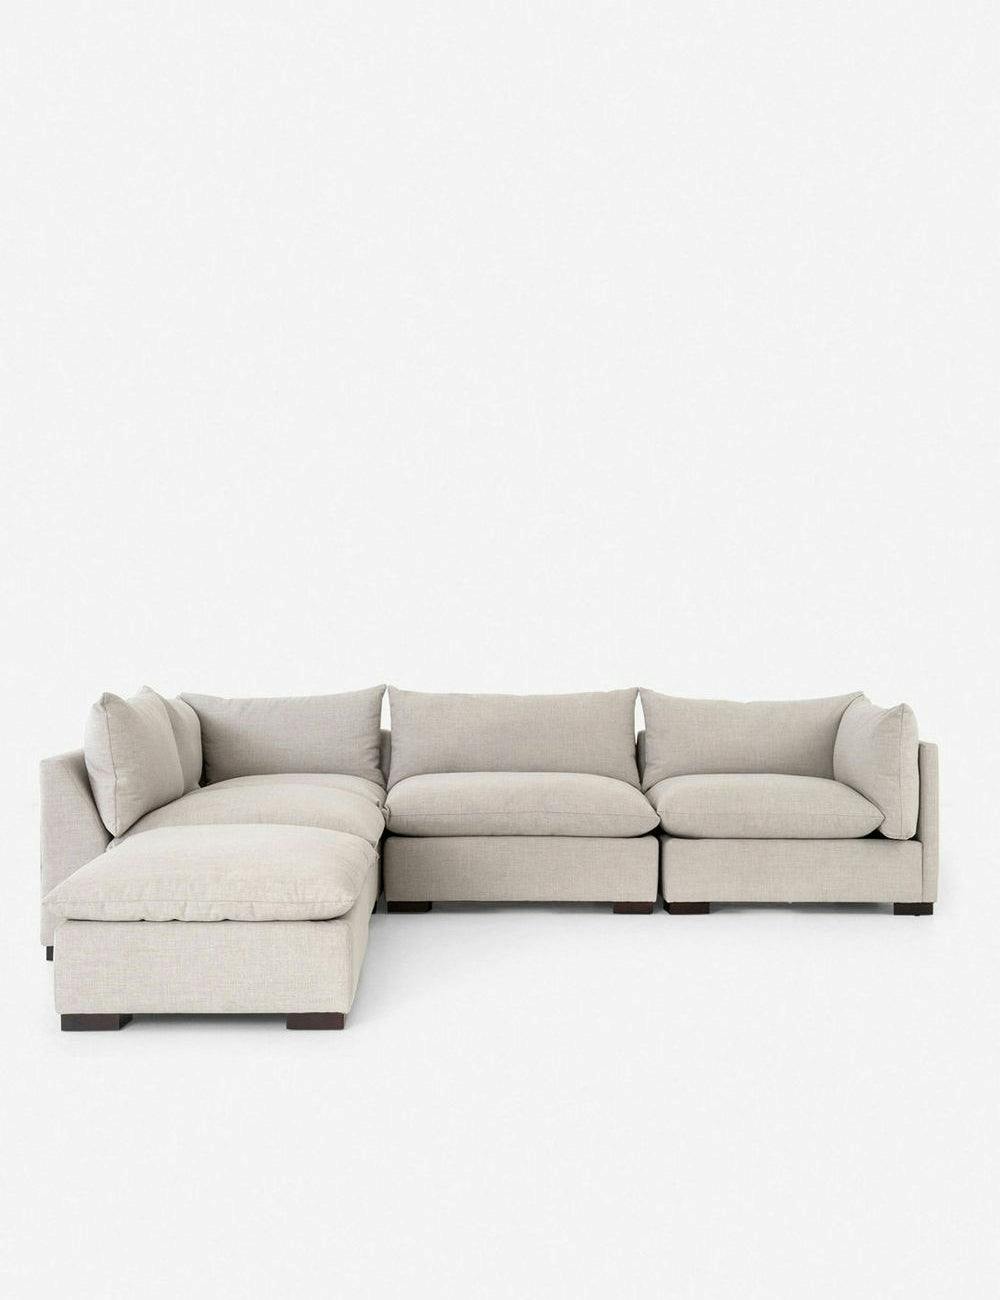 Bennett Moon Modular Sectional Sofa with Ottoman and Pillow Back